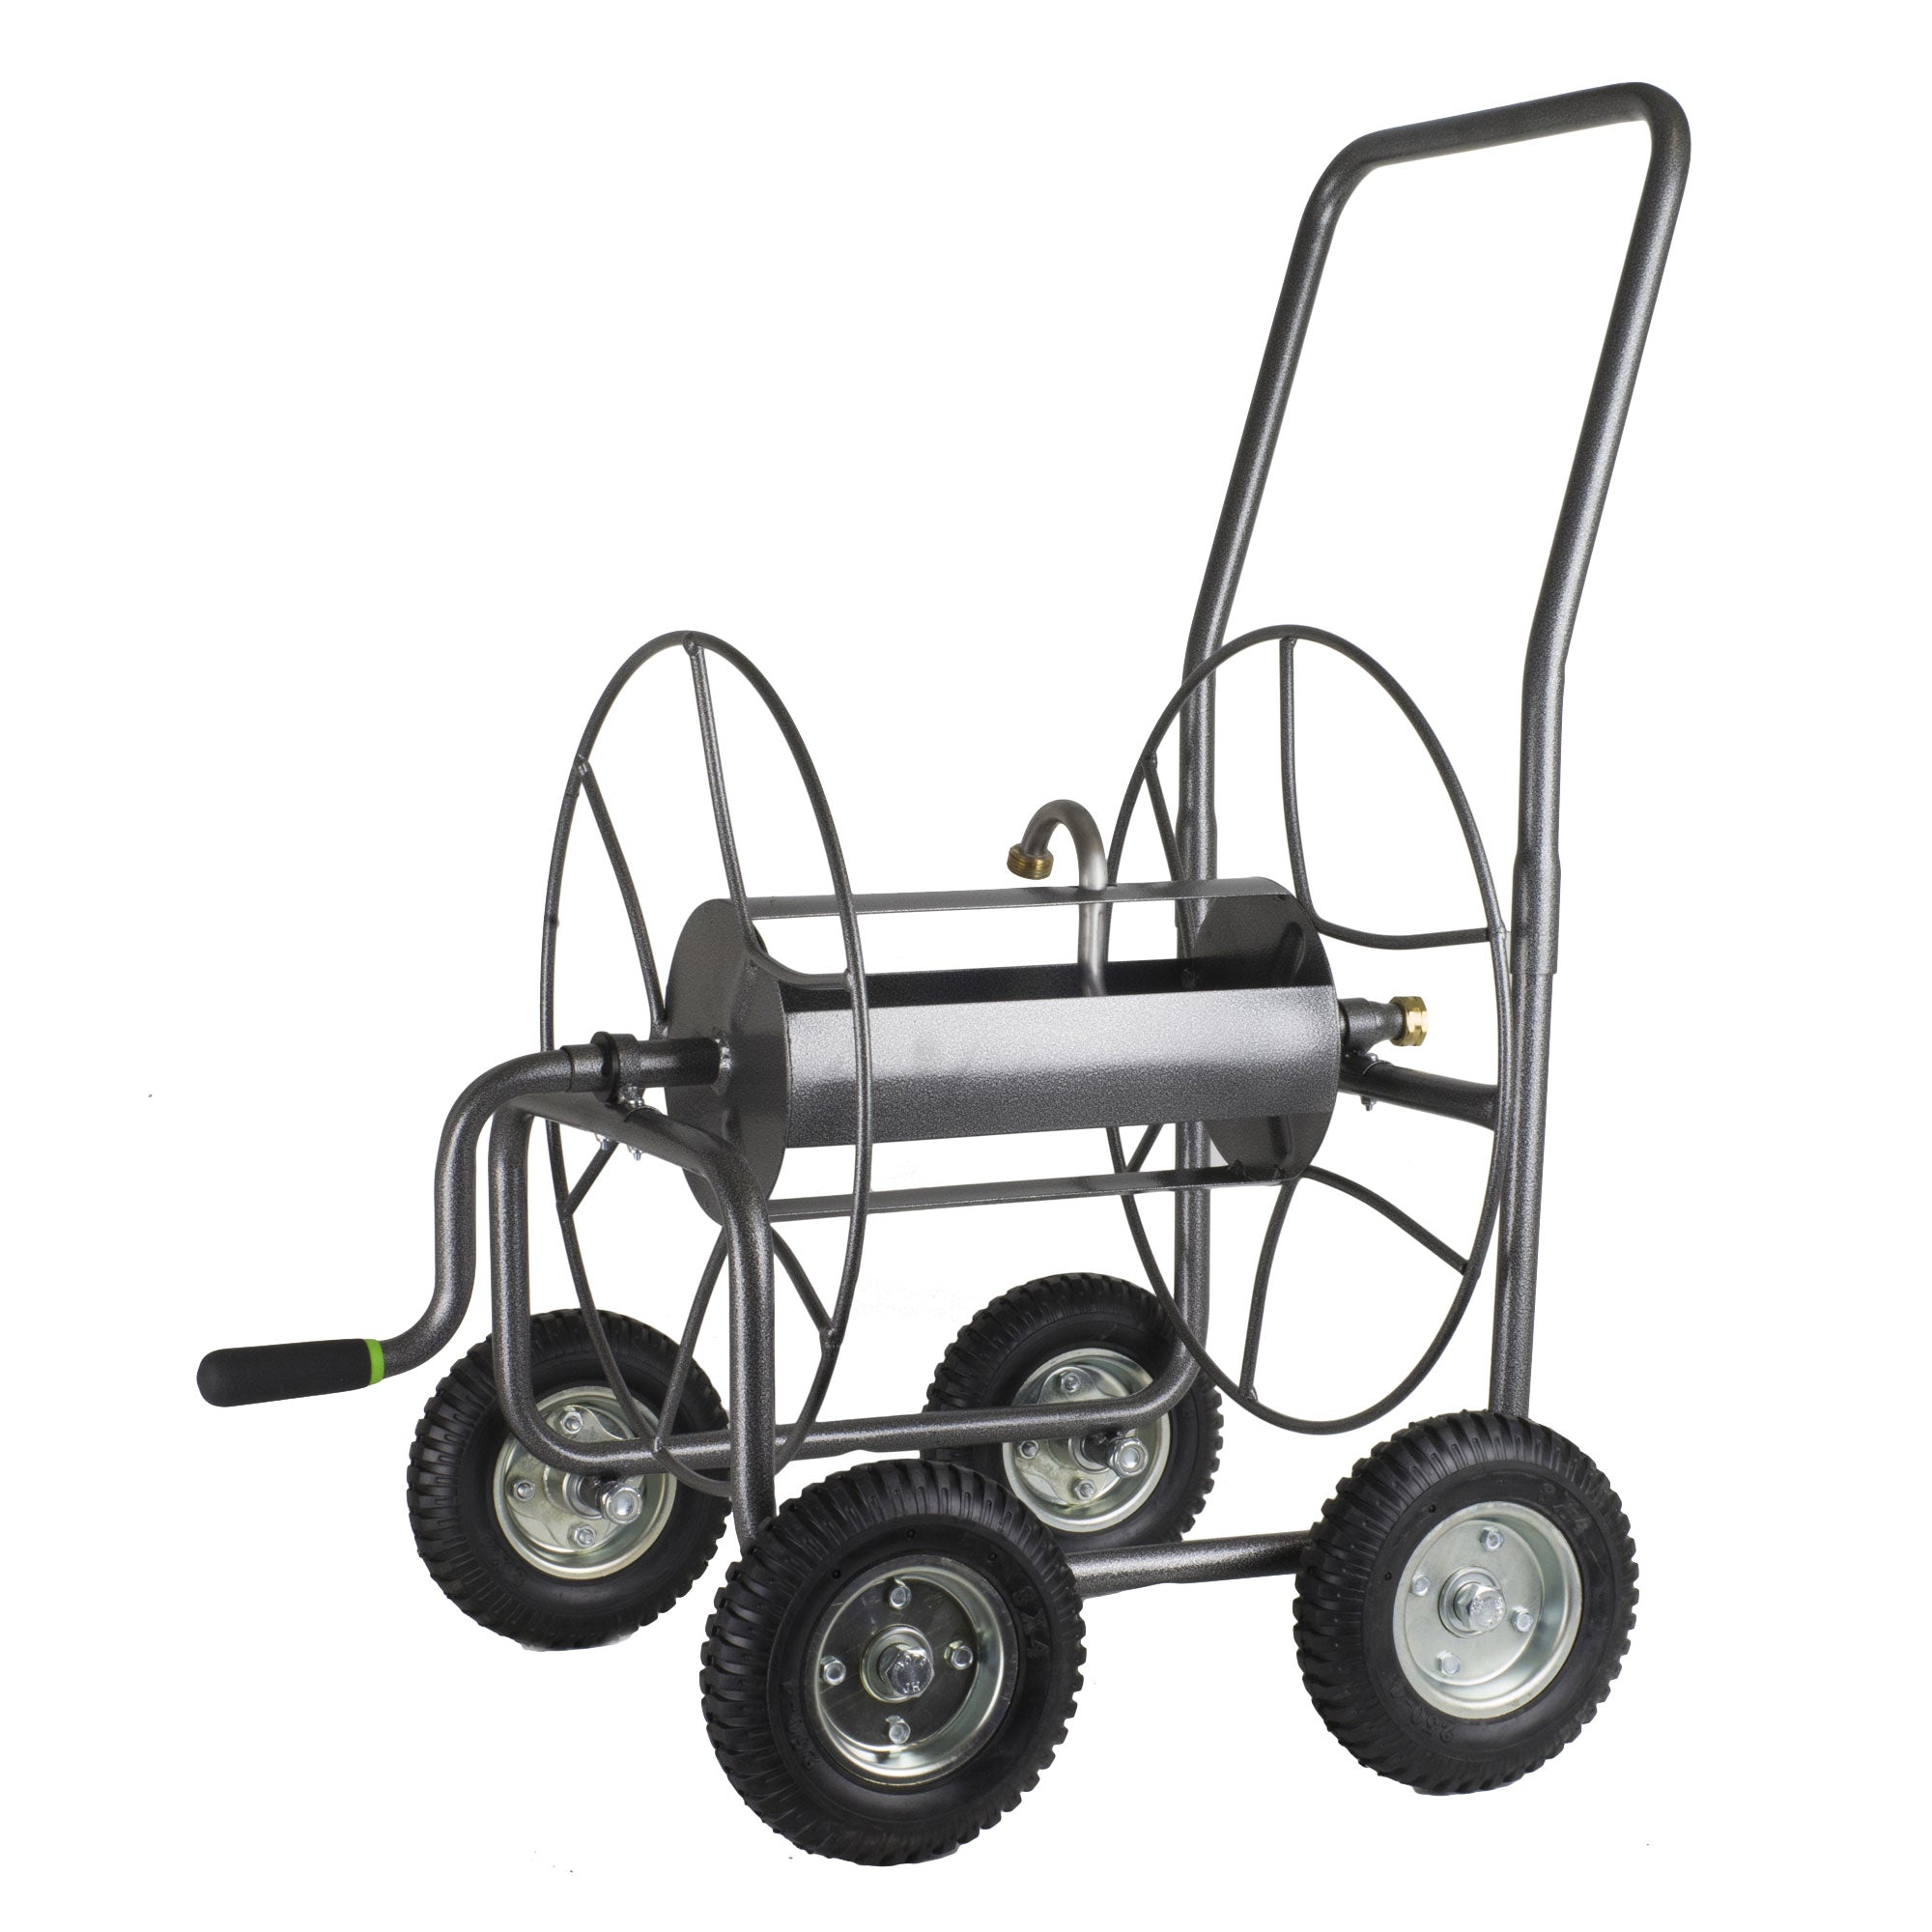 Yard Butler EZ Turn Hose Cart : heavy duty 4 wheel garden hose wagon